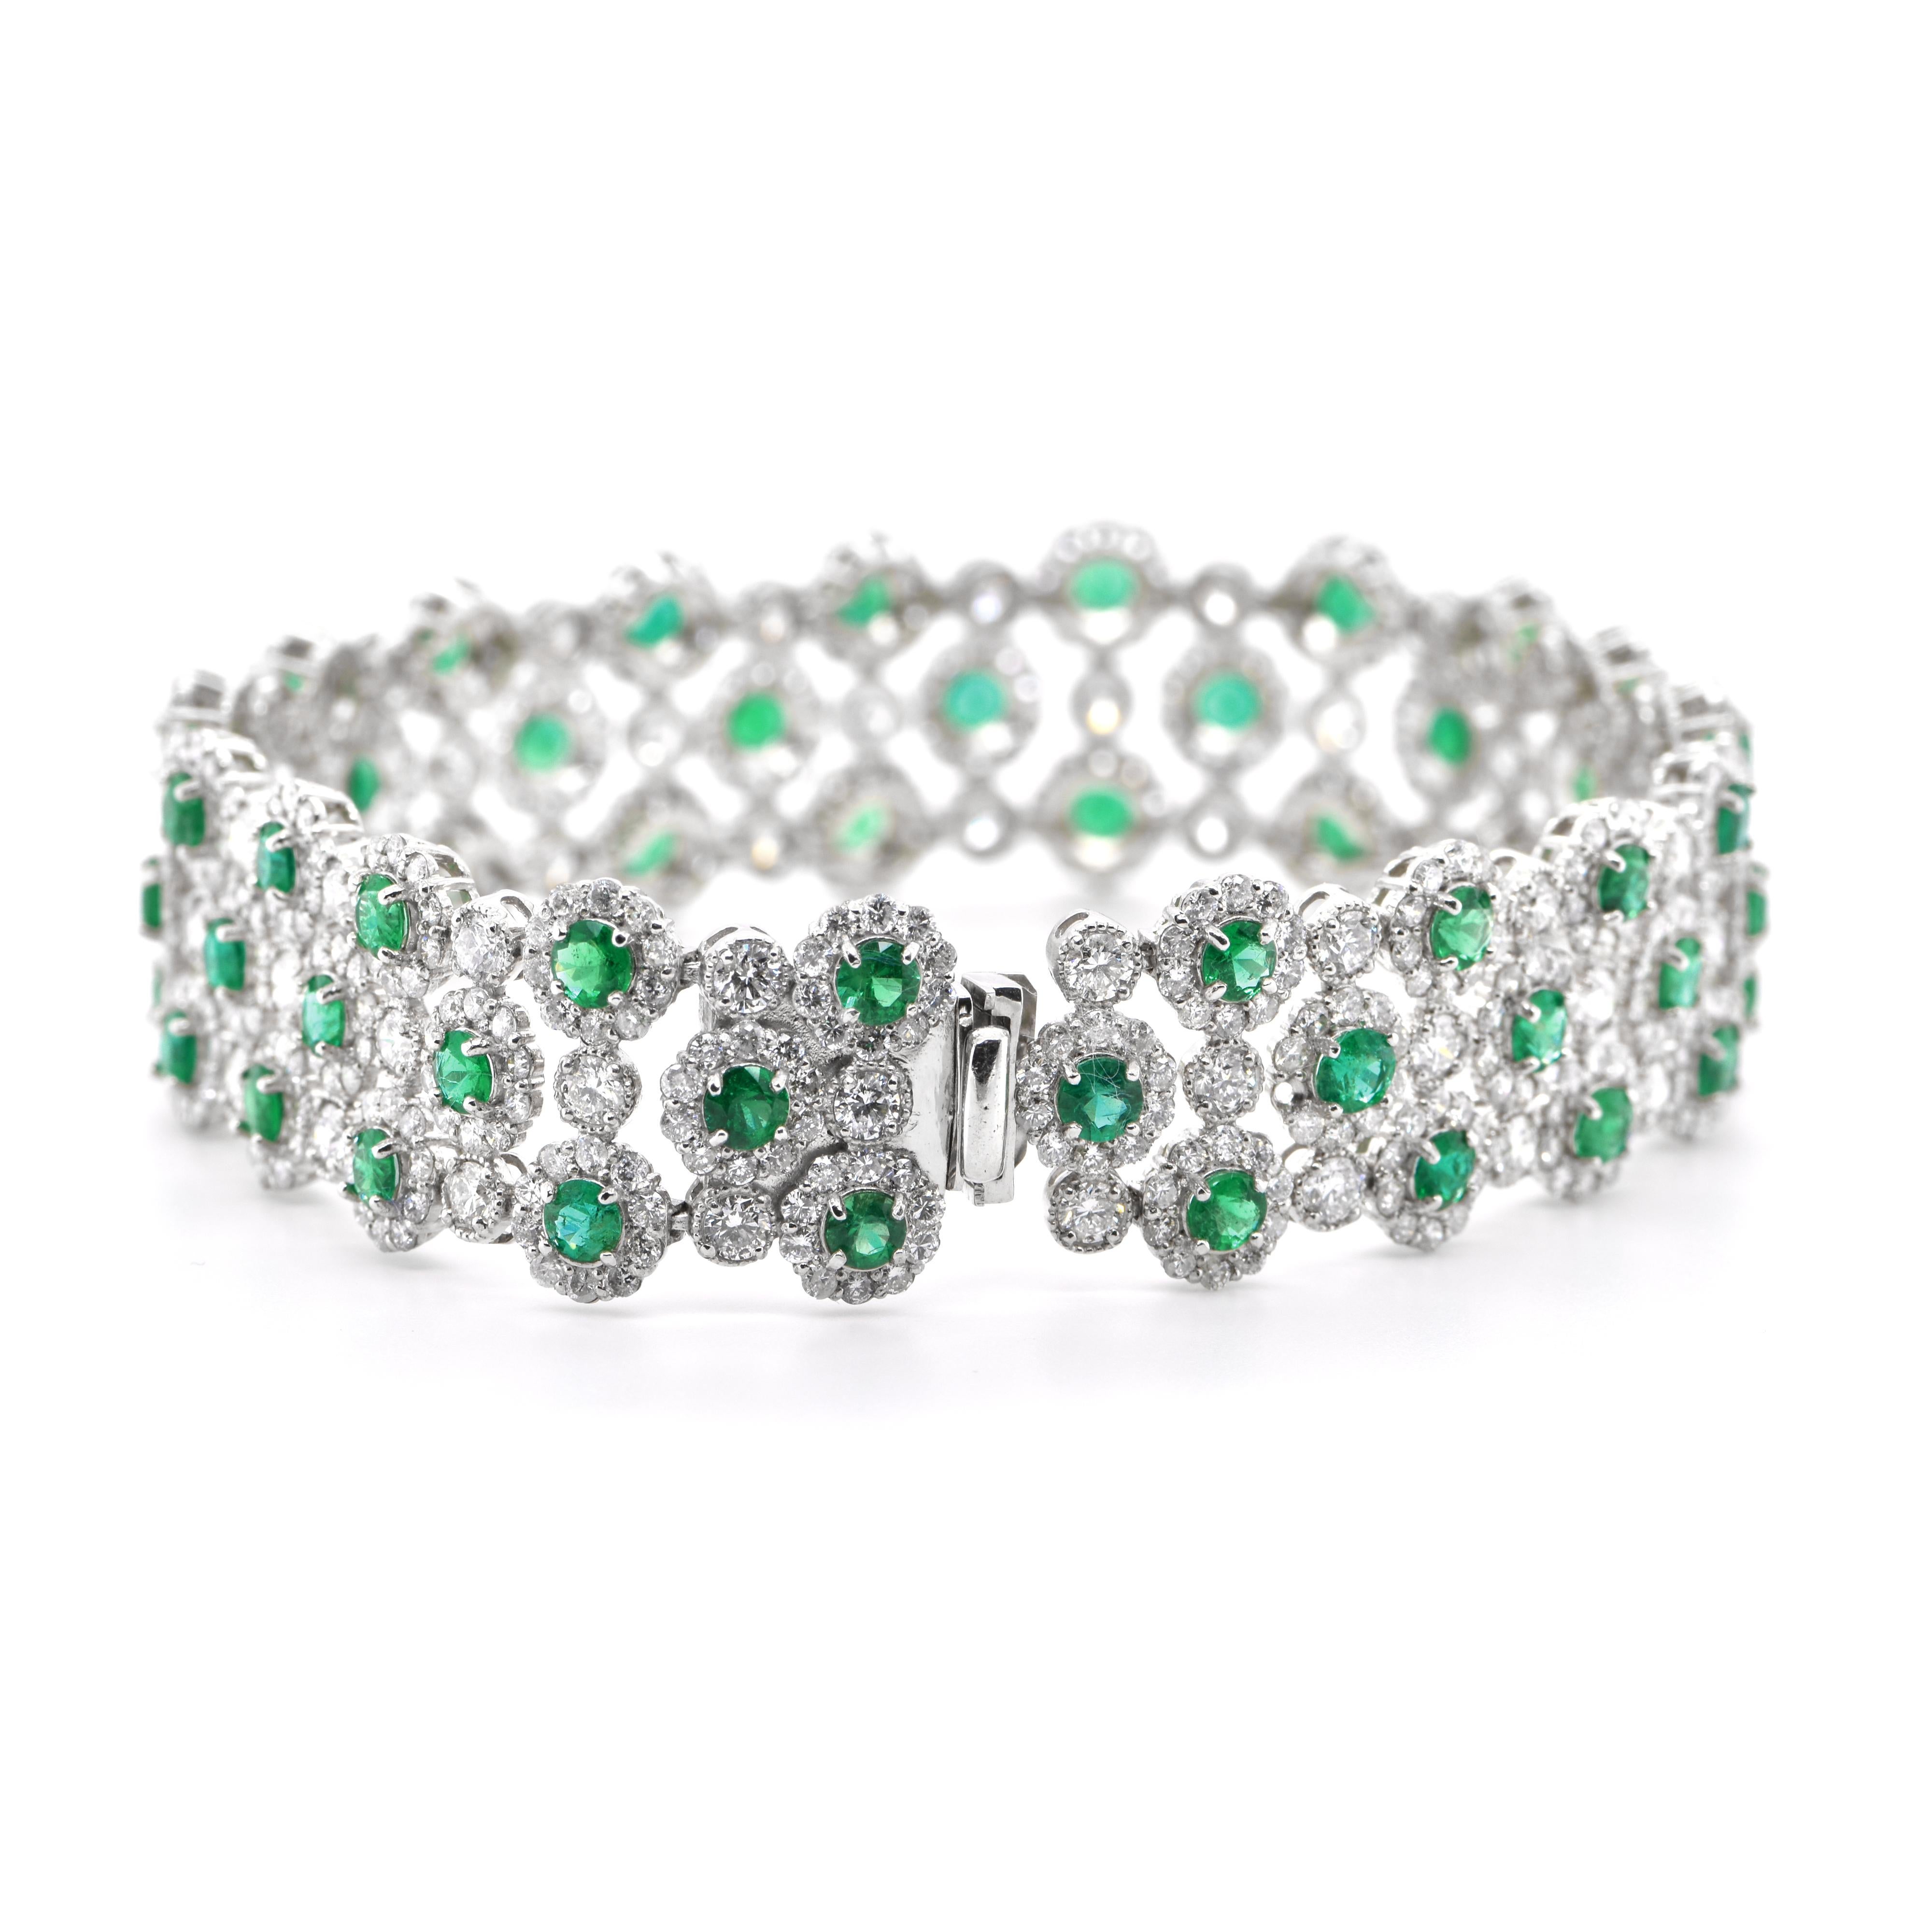 Modern 5.19 Carat Natural Round Cut Emeralds and Diamonds Bracelet Set in Platinum